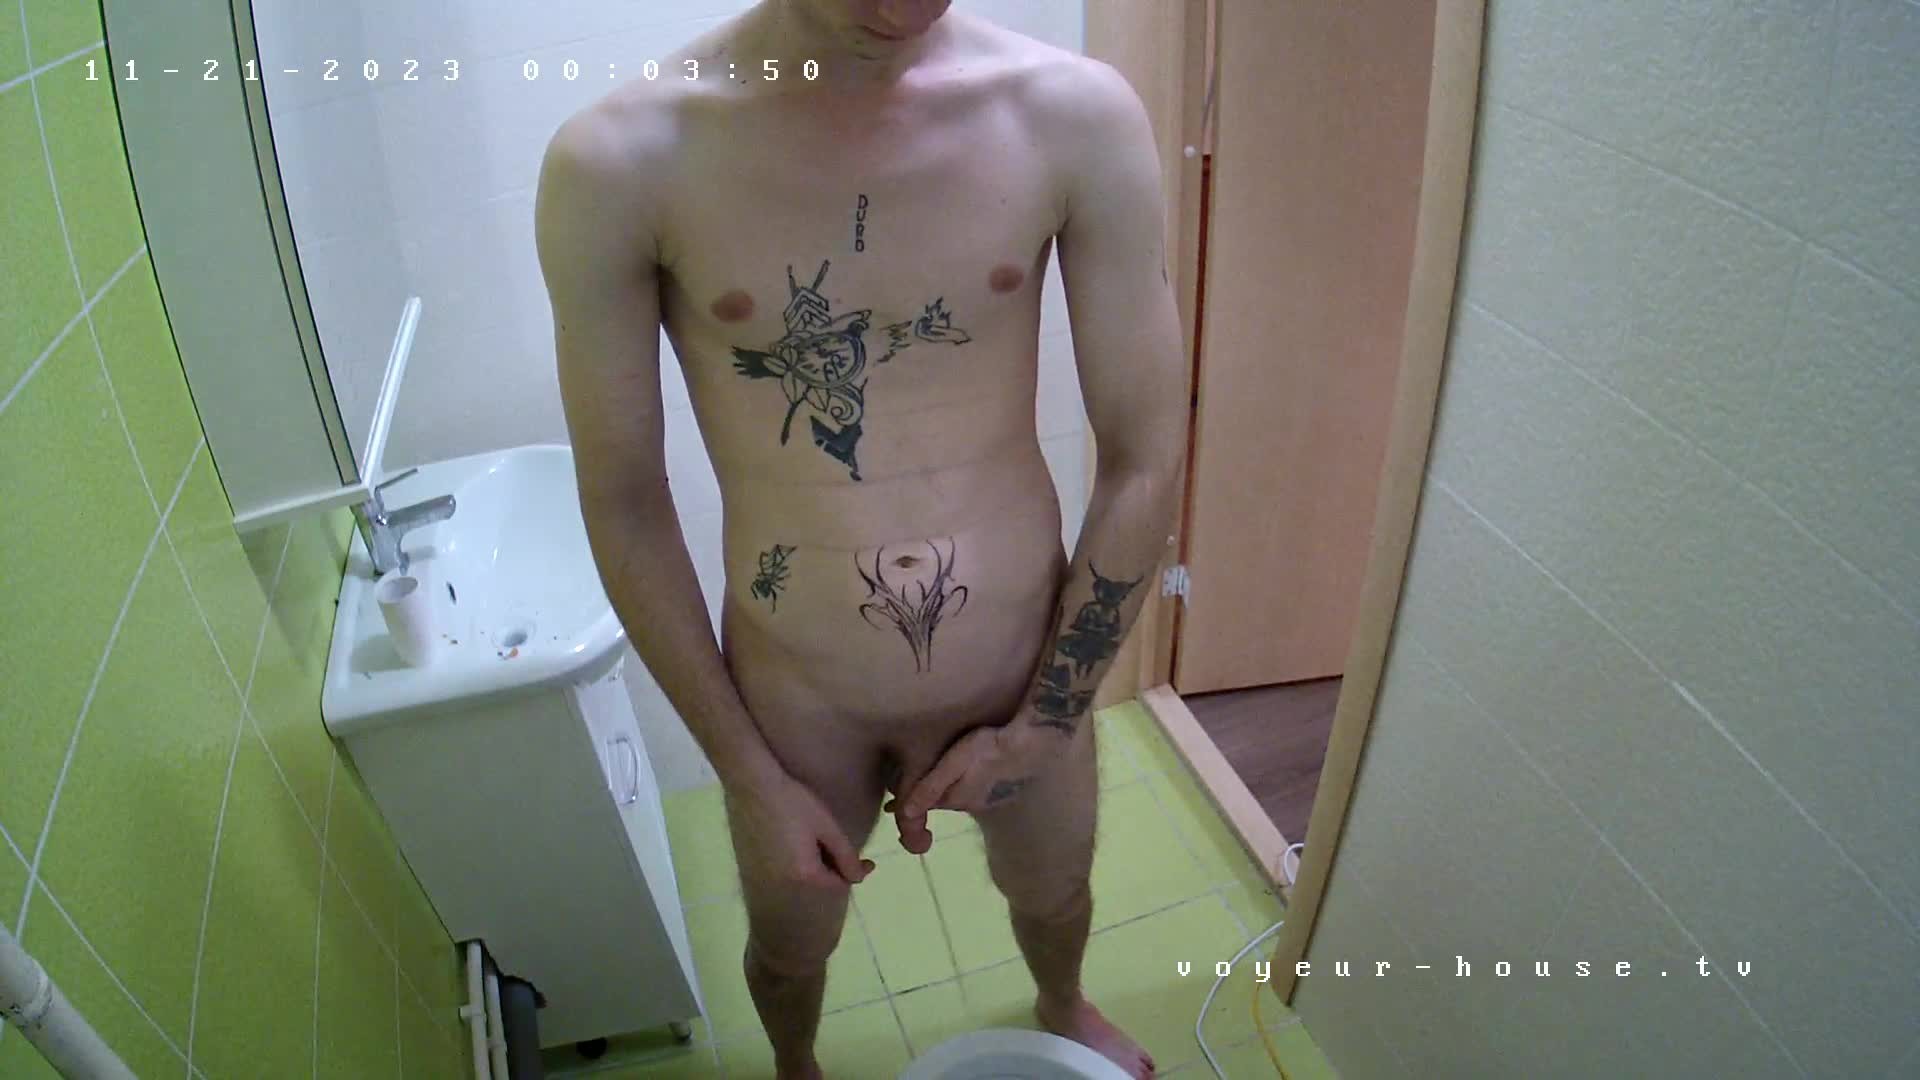 Naked Tristan peeing 21 Nov 2023